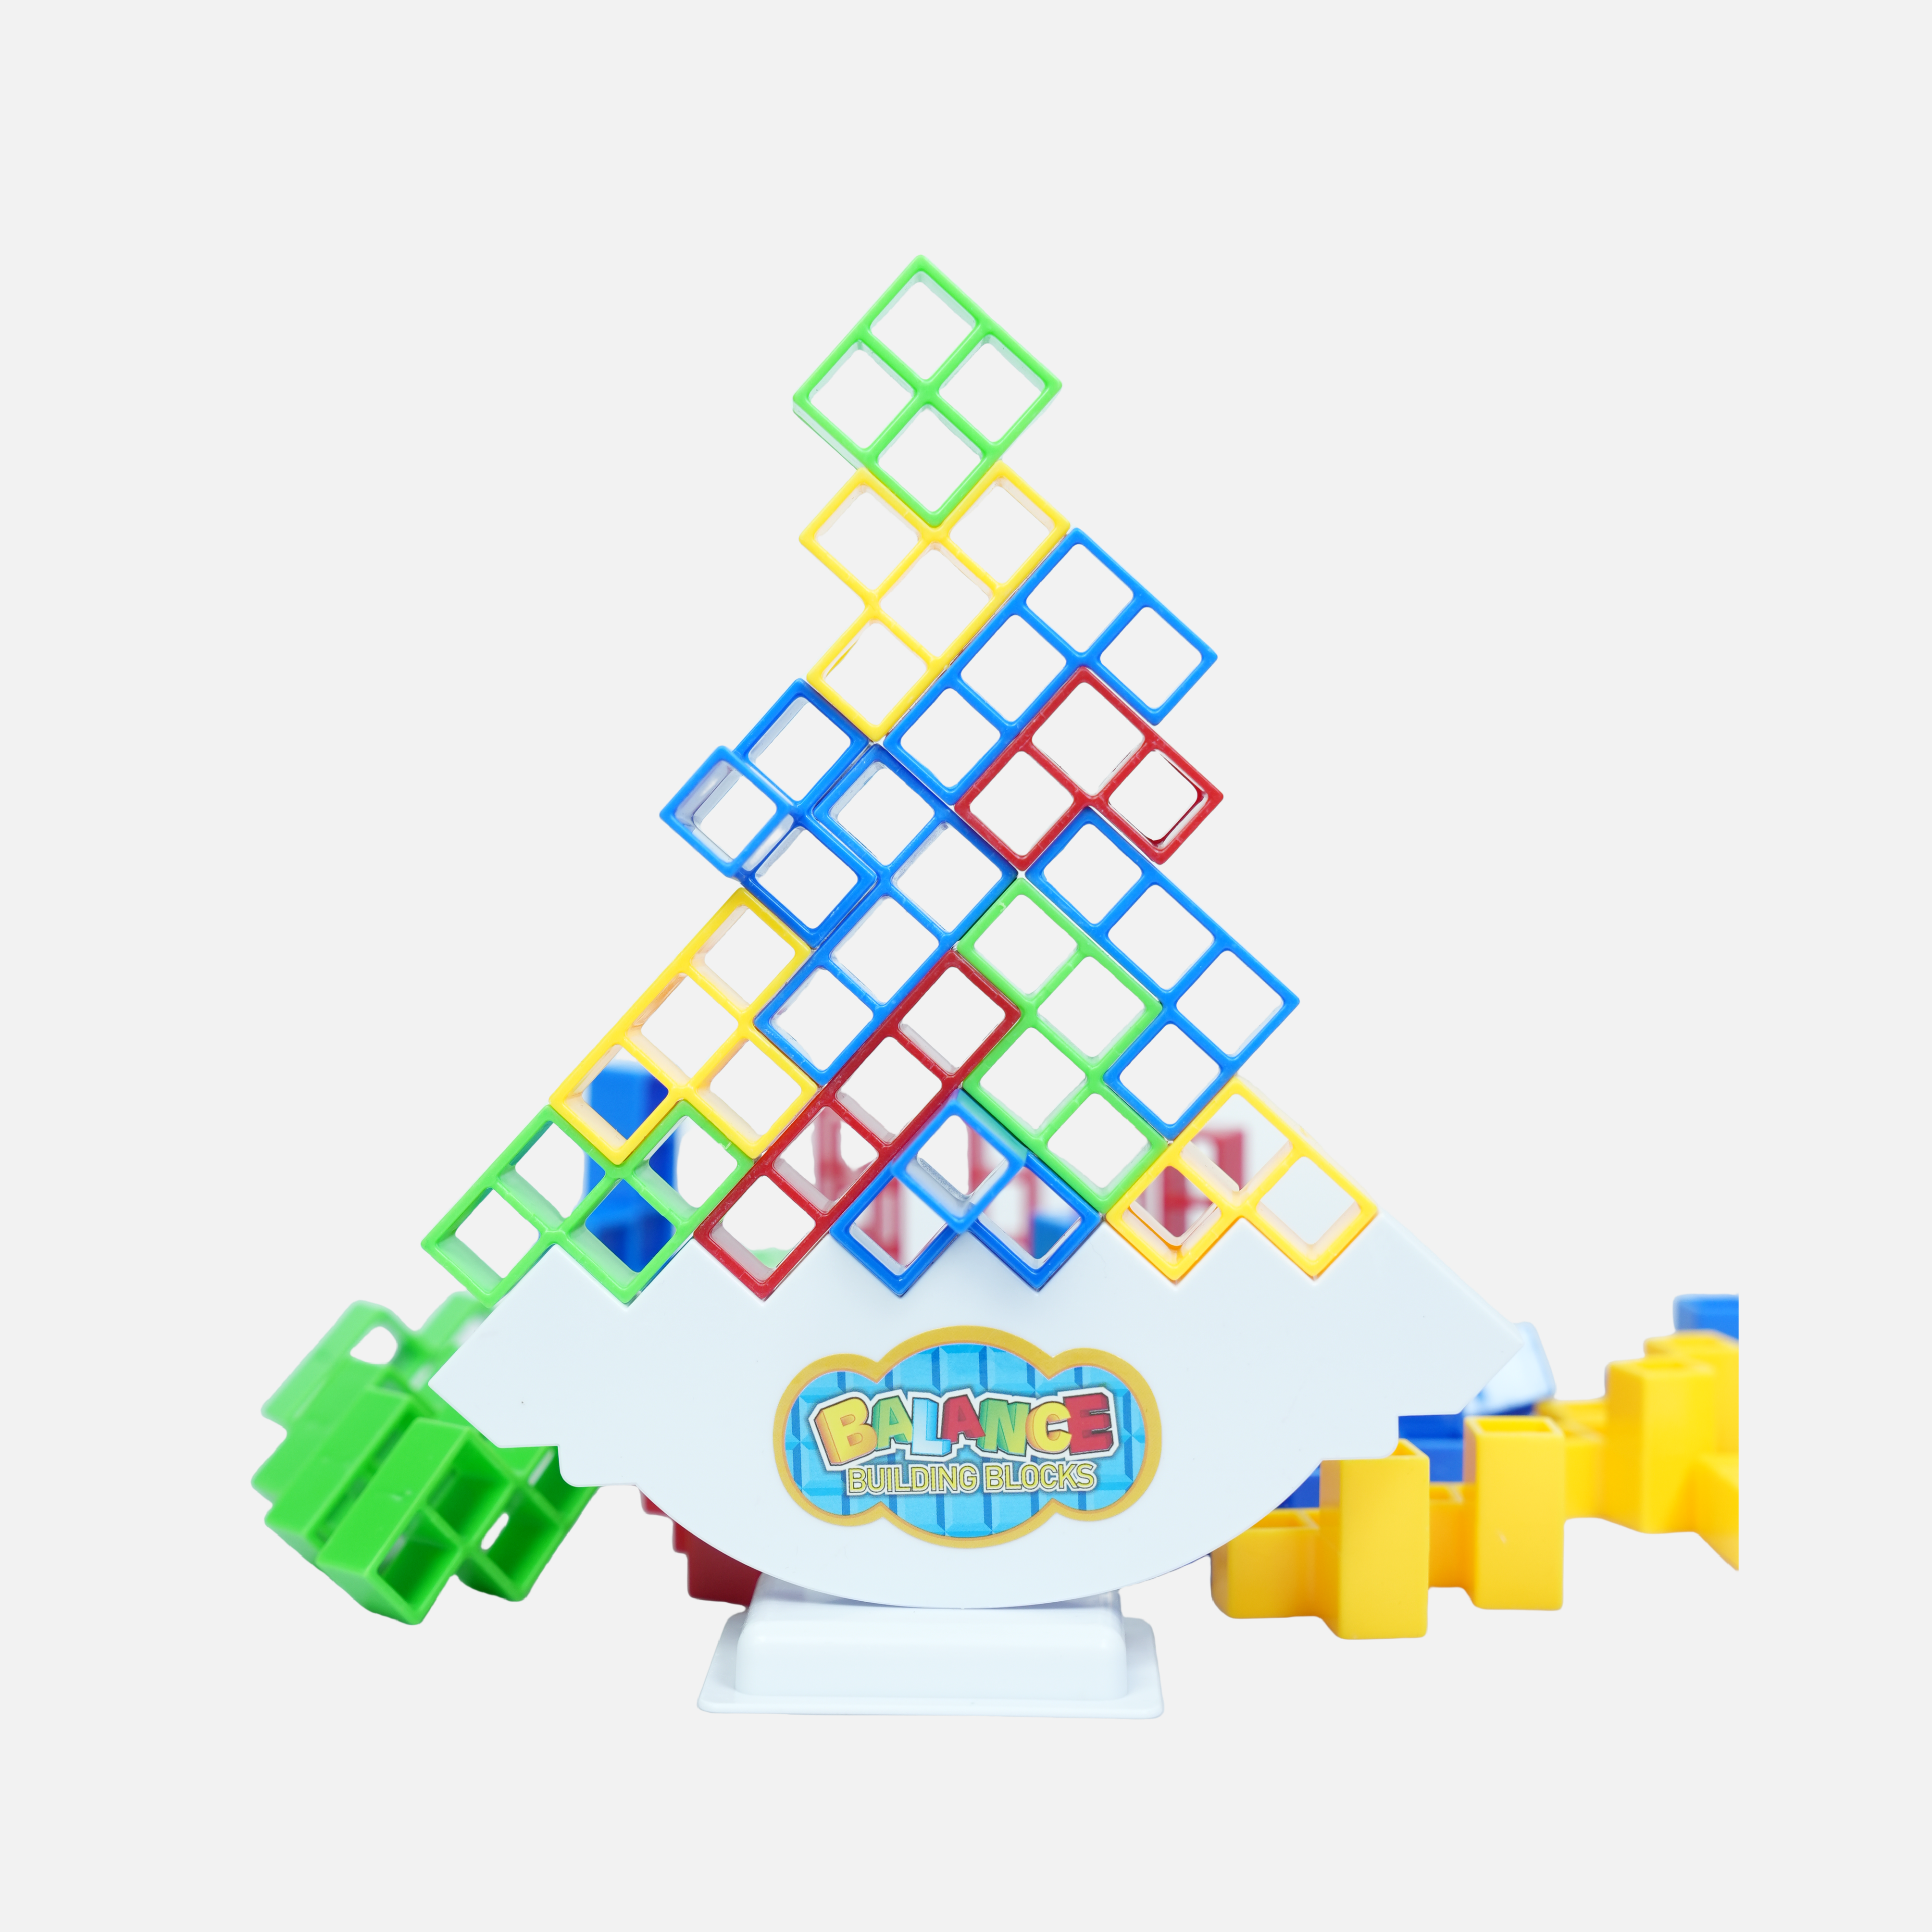 02-Balance building blocks swing Tetris